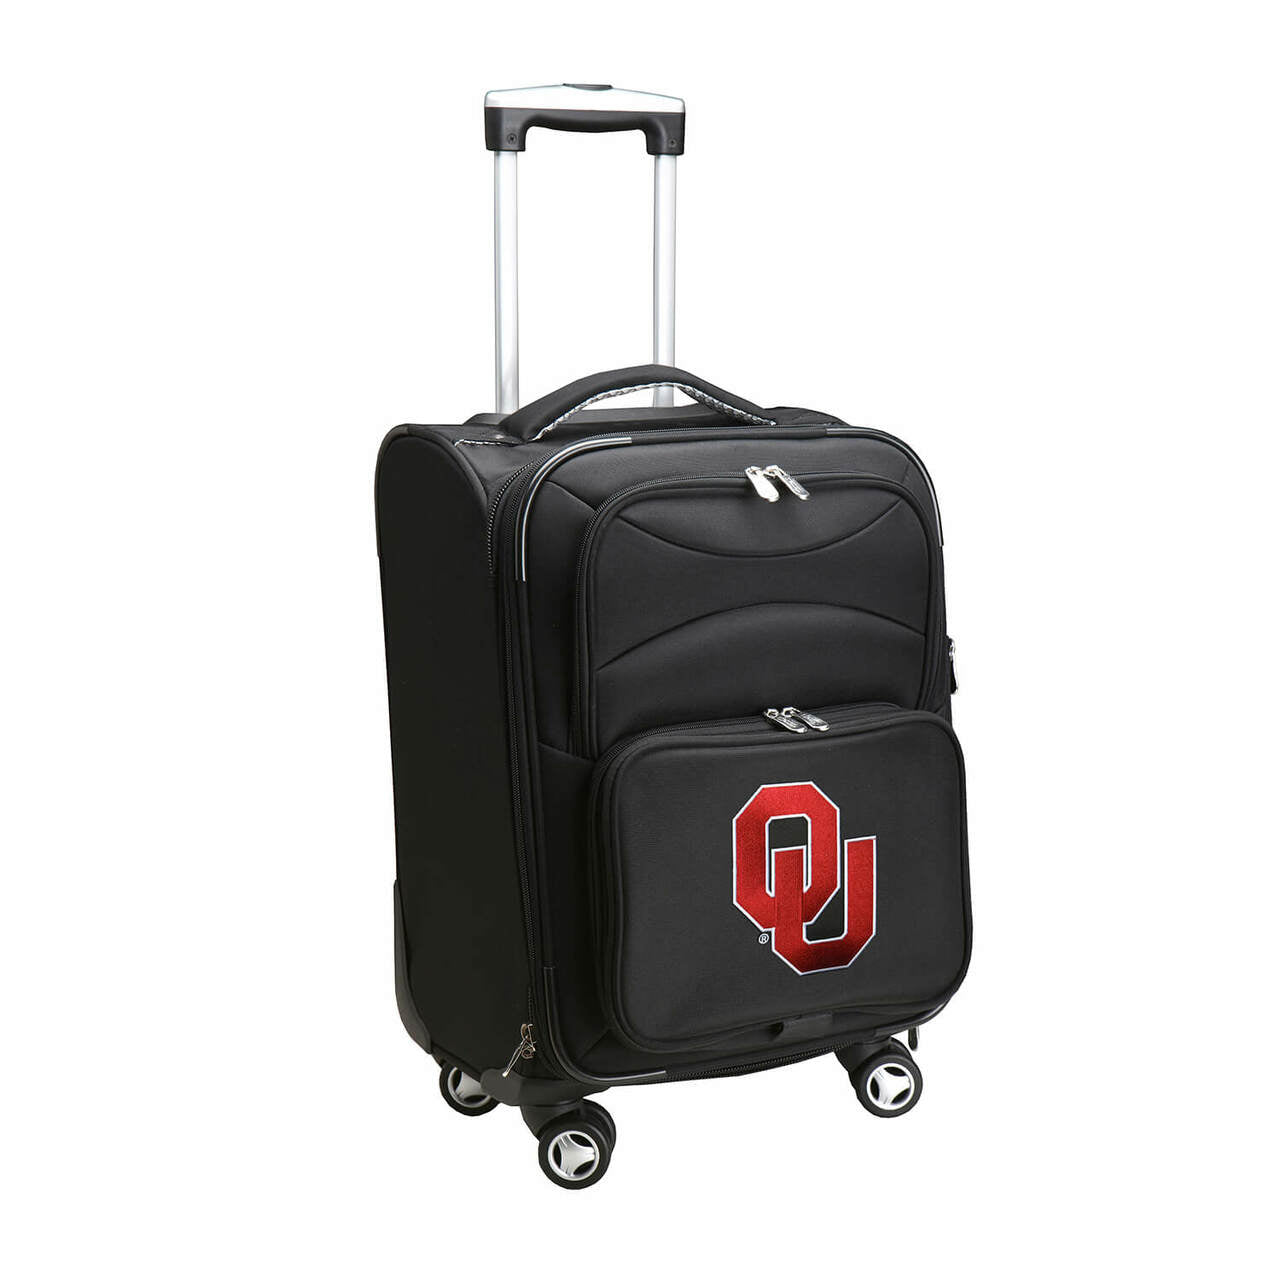 Sooners Luggage | Oklahoma Sooners 20" Carry-on Spinner Luggage